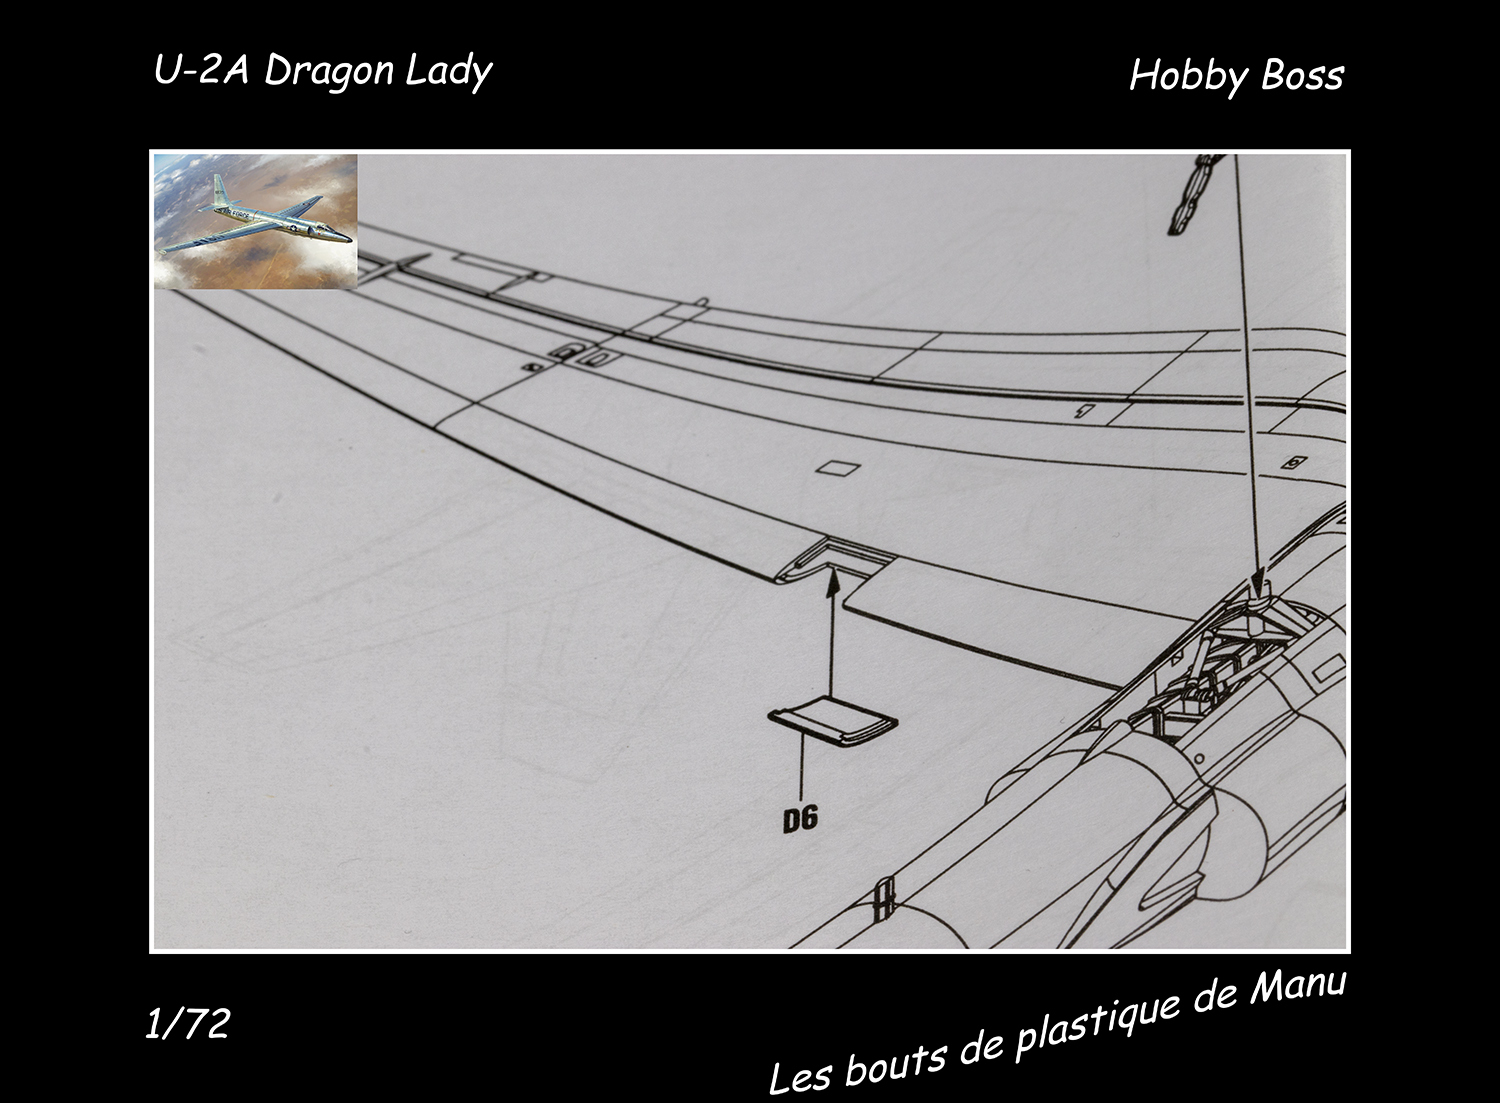 [Hobby Boss] U-2A Dragon Lady - Greffe sans rejet 616f